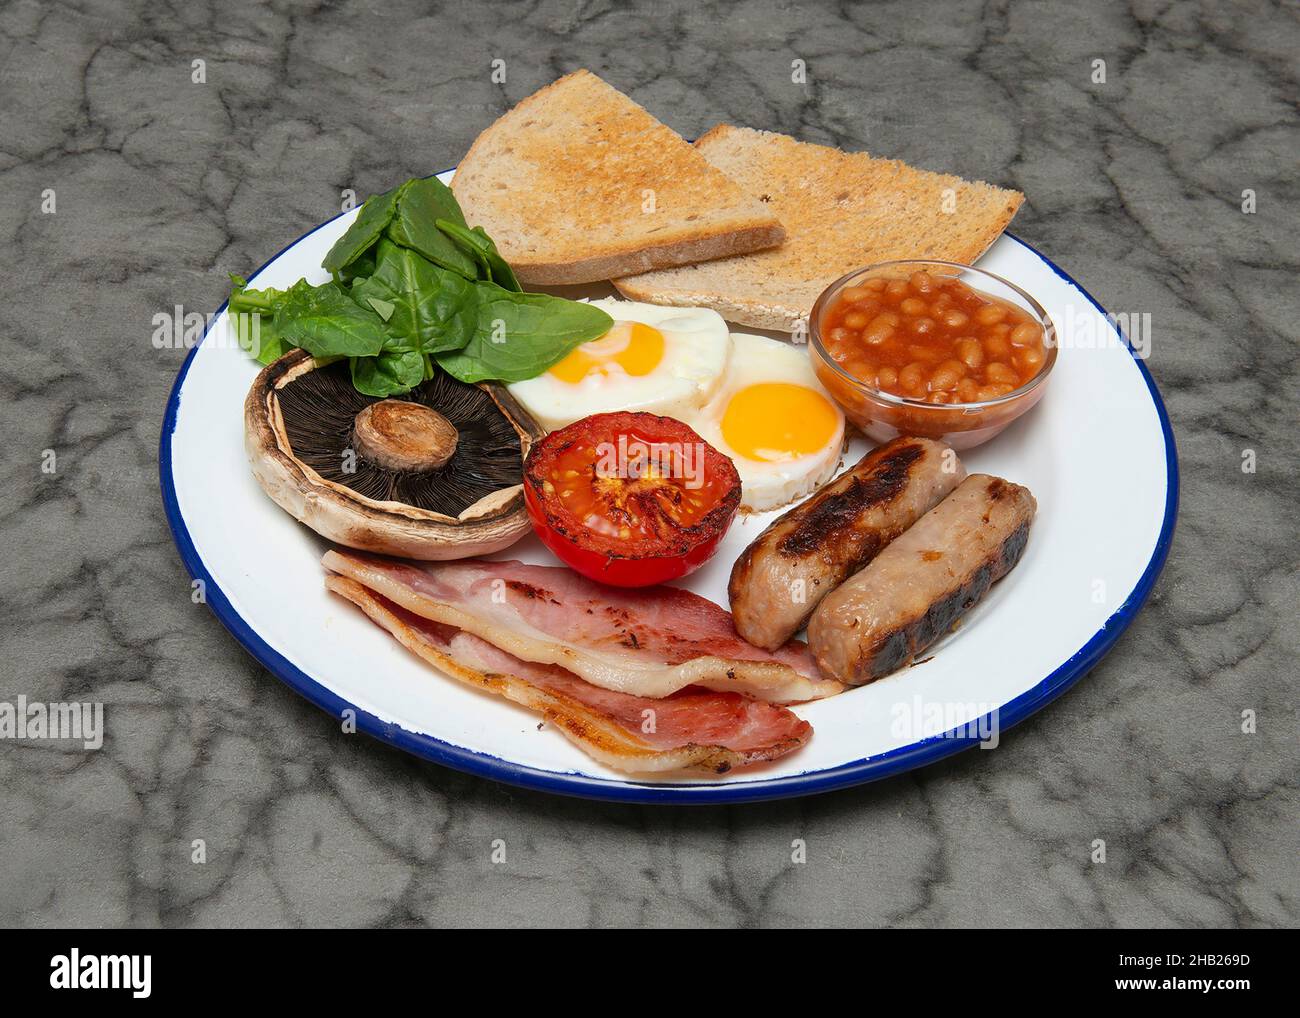 Full English breakfast Stock Photo